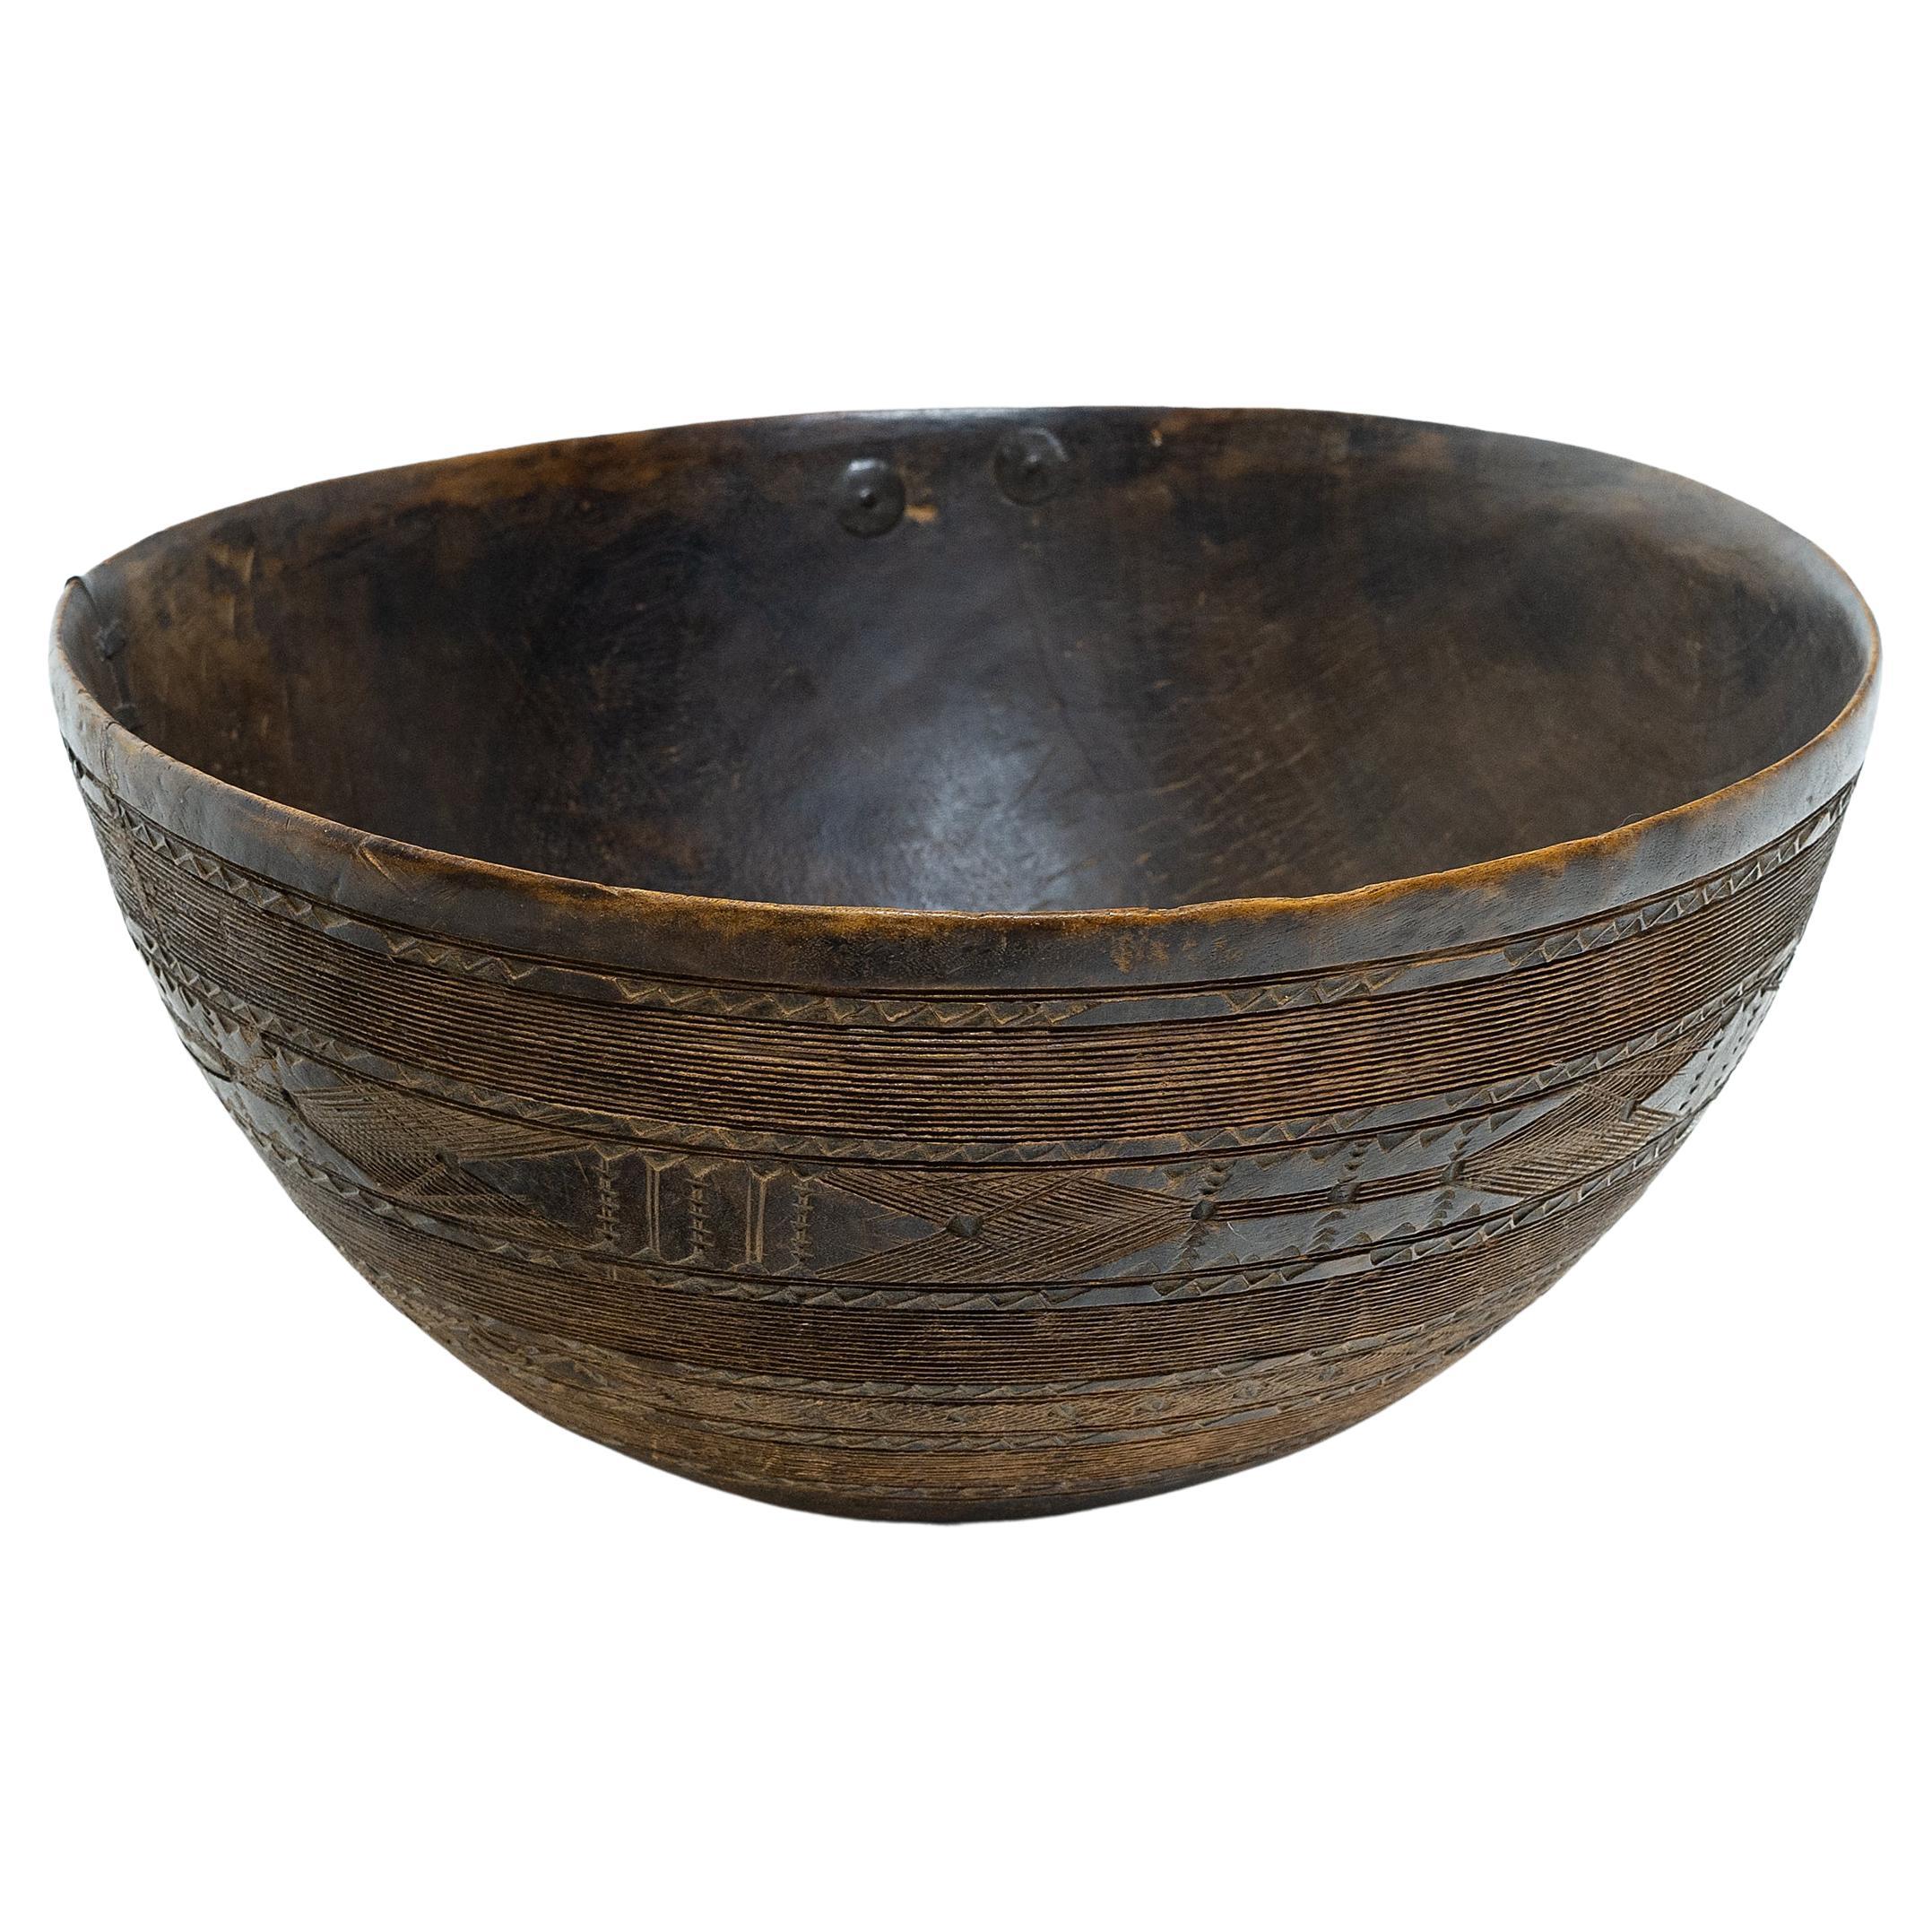 Fulani Incised Bowl, C. 1900